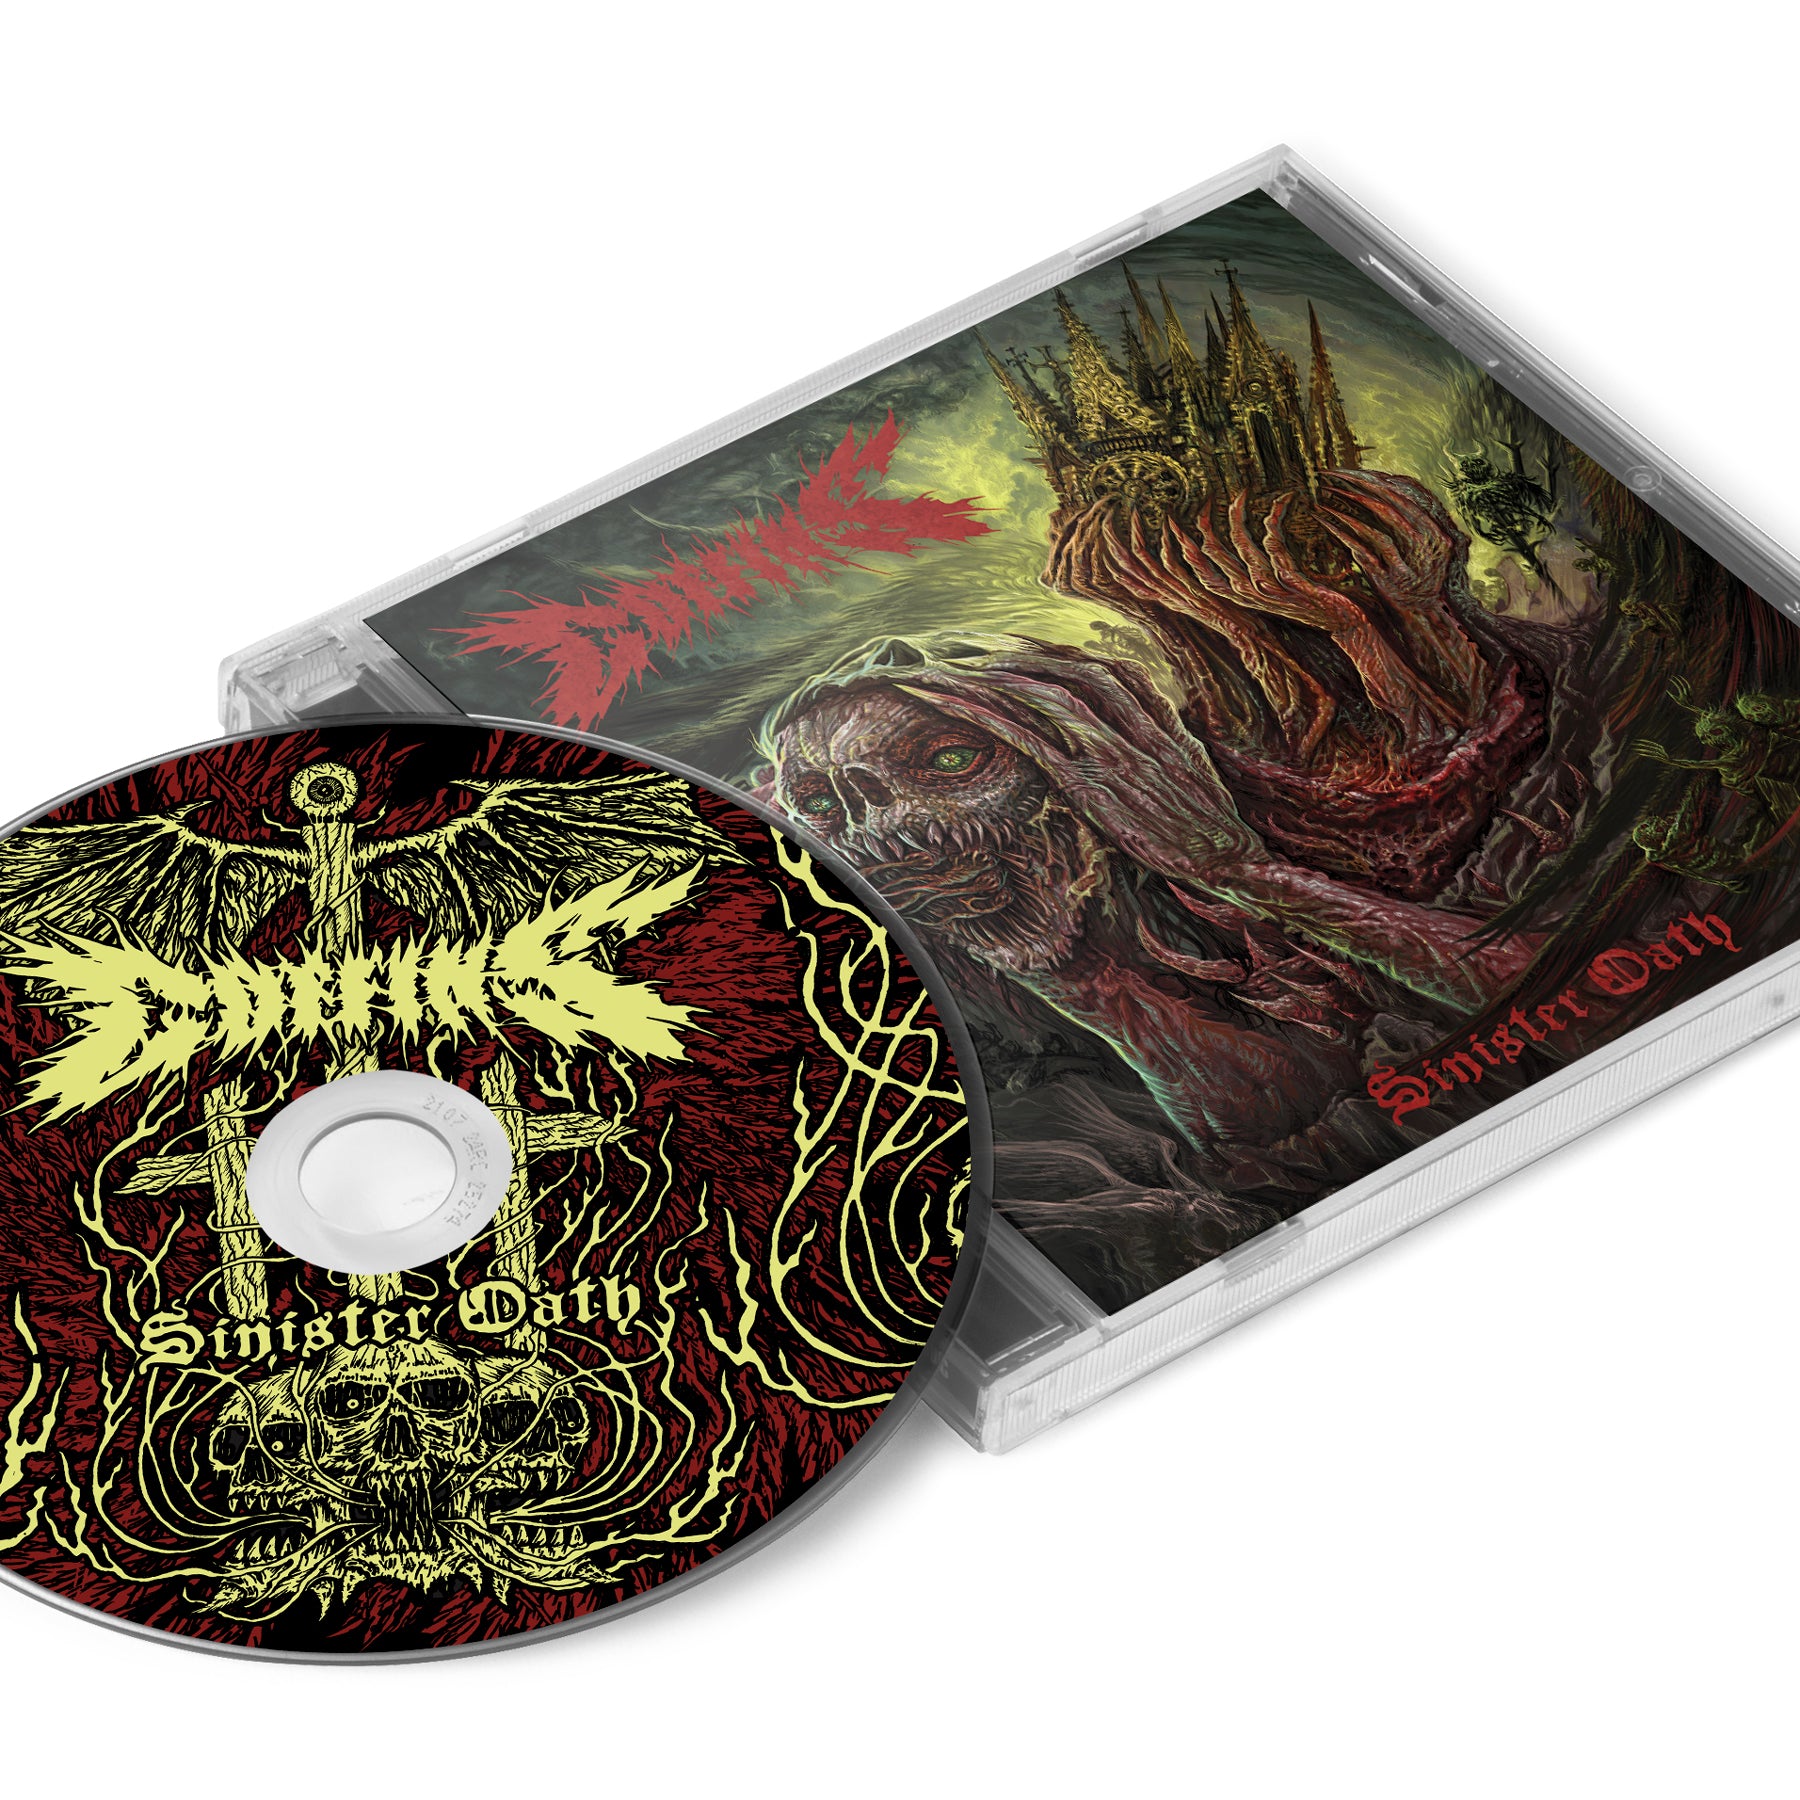 Coffins "Sinister Oath" CD